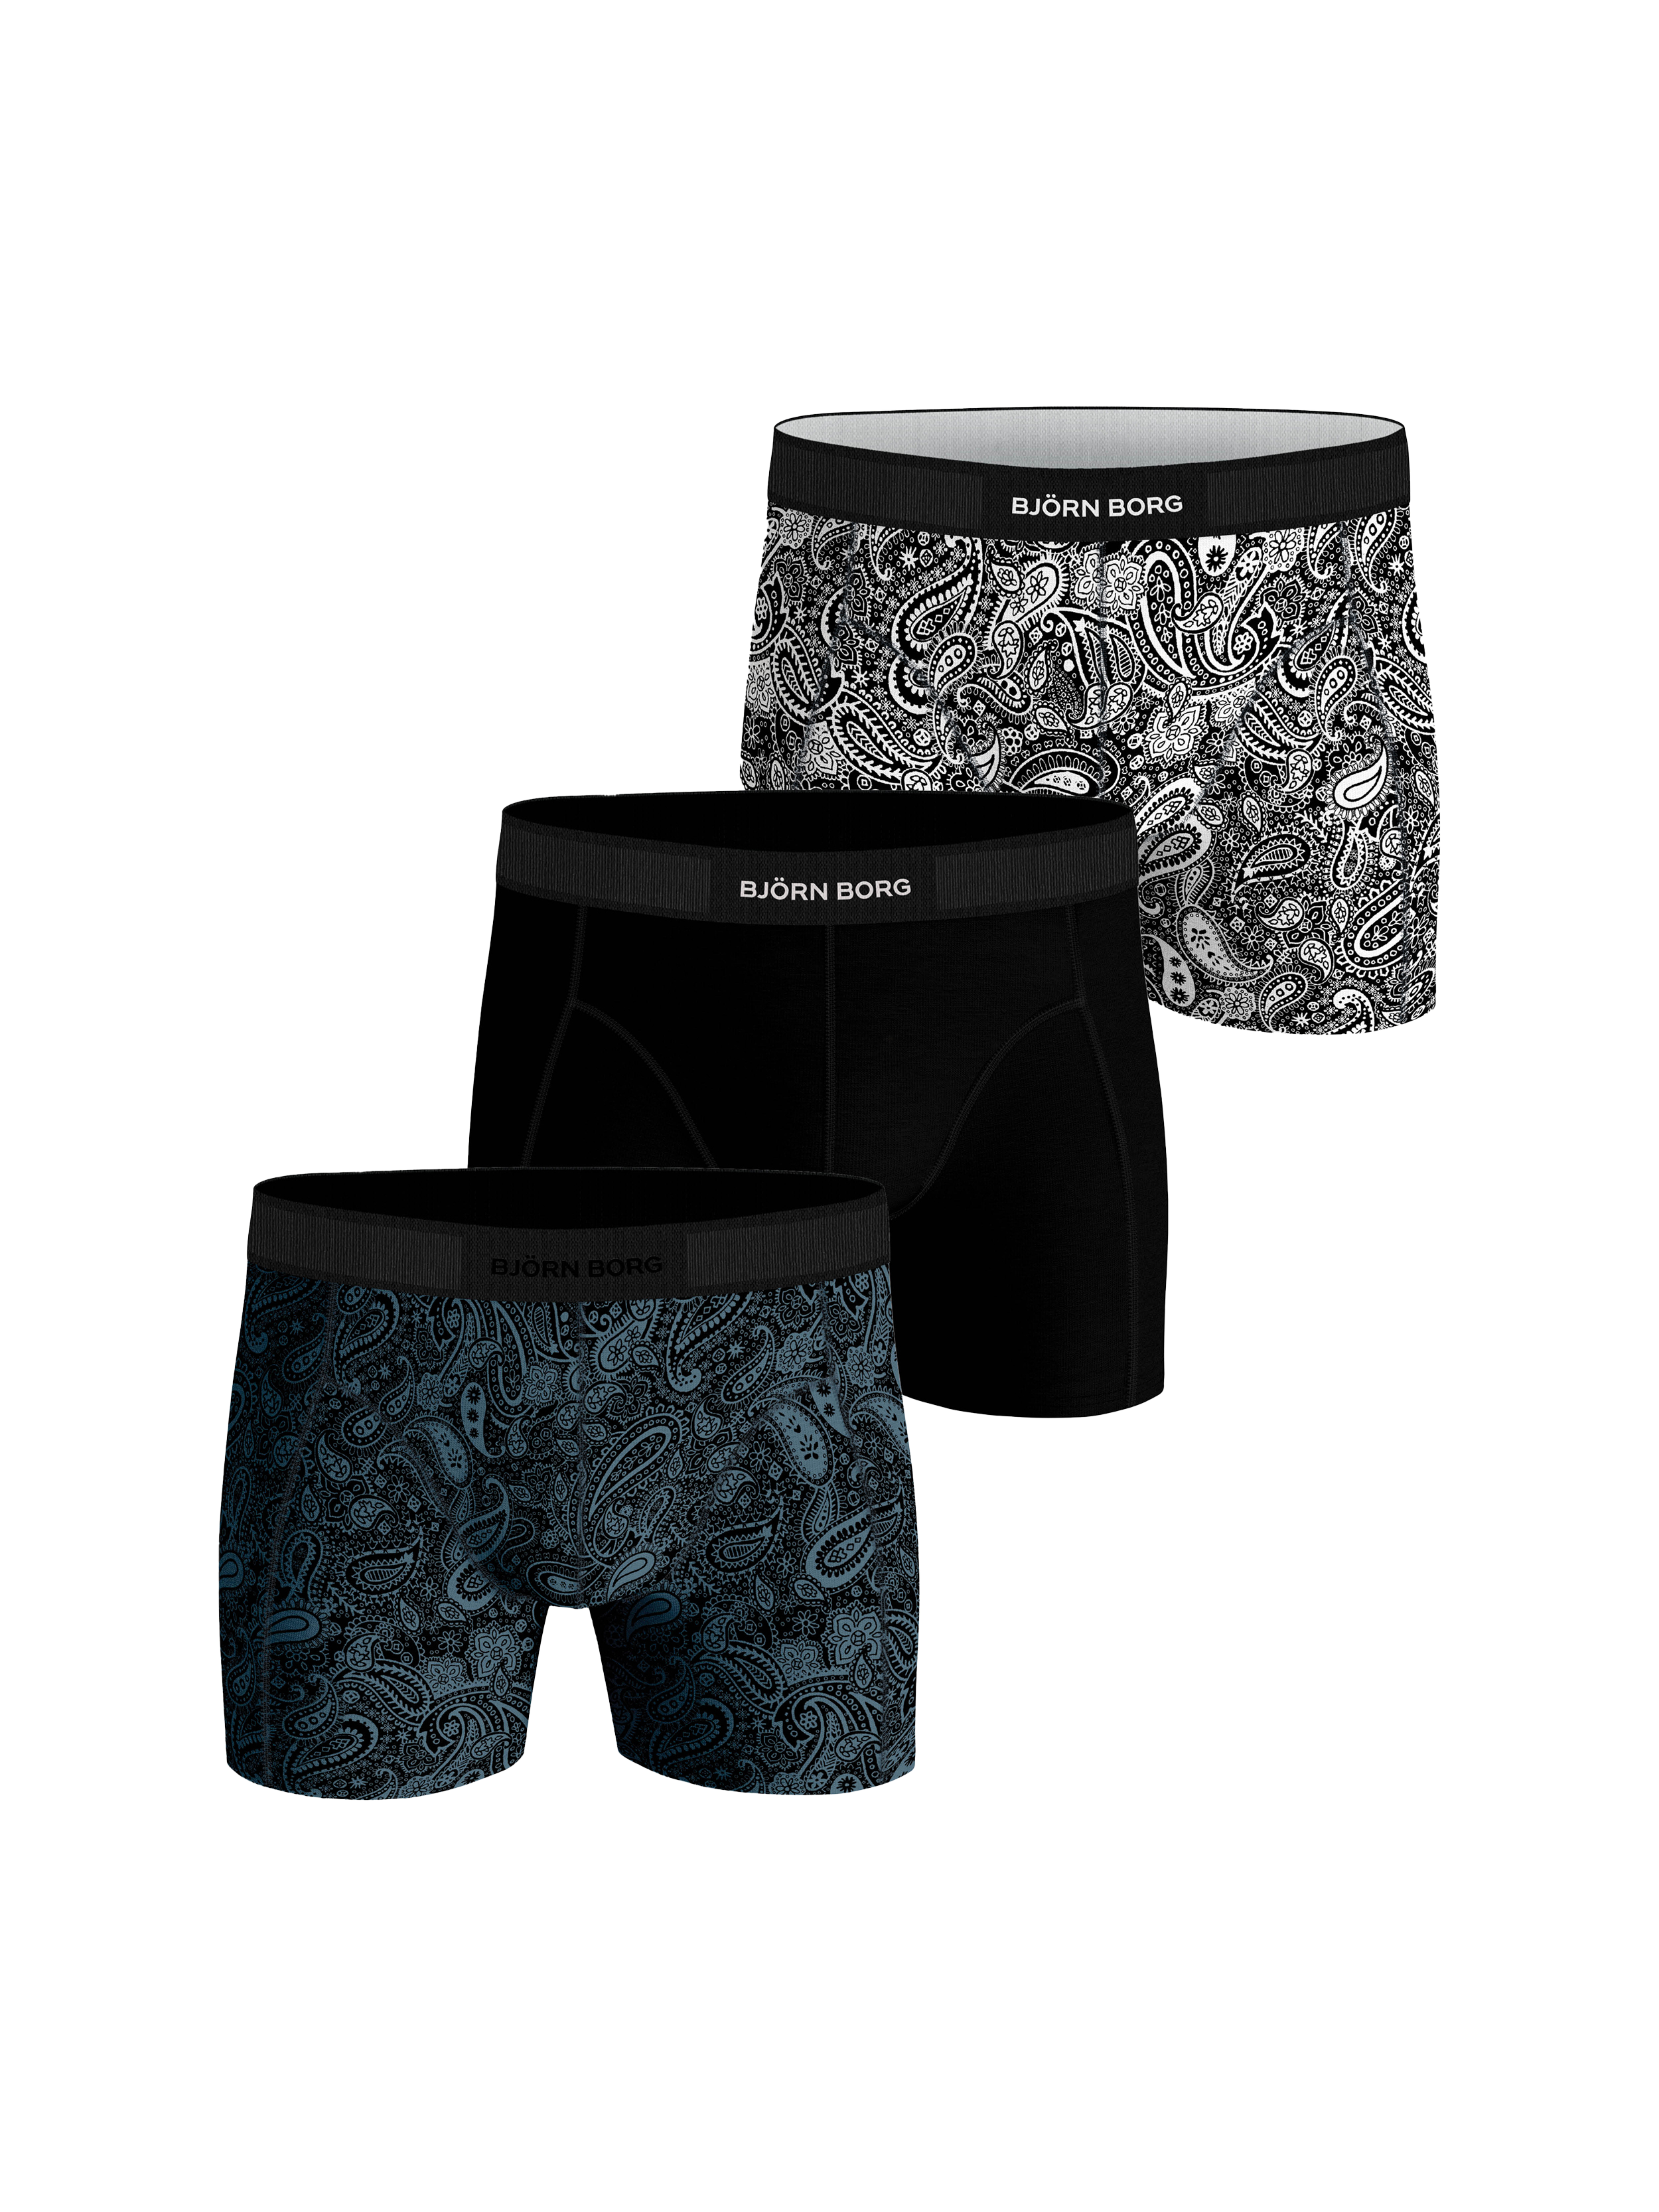 Donnay Micro Fibre Shorts